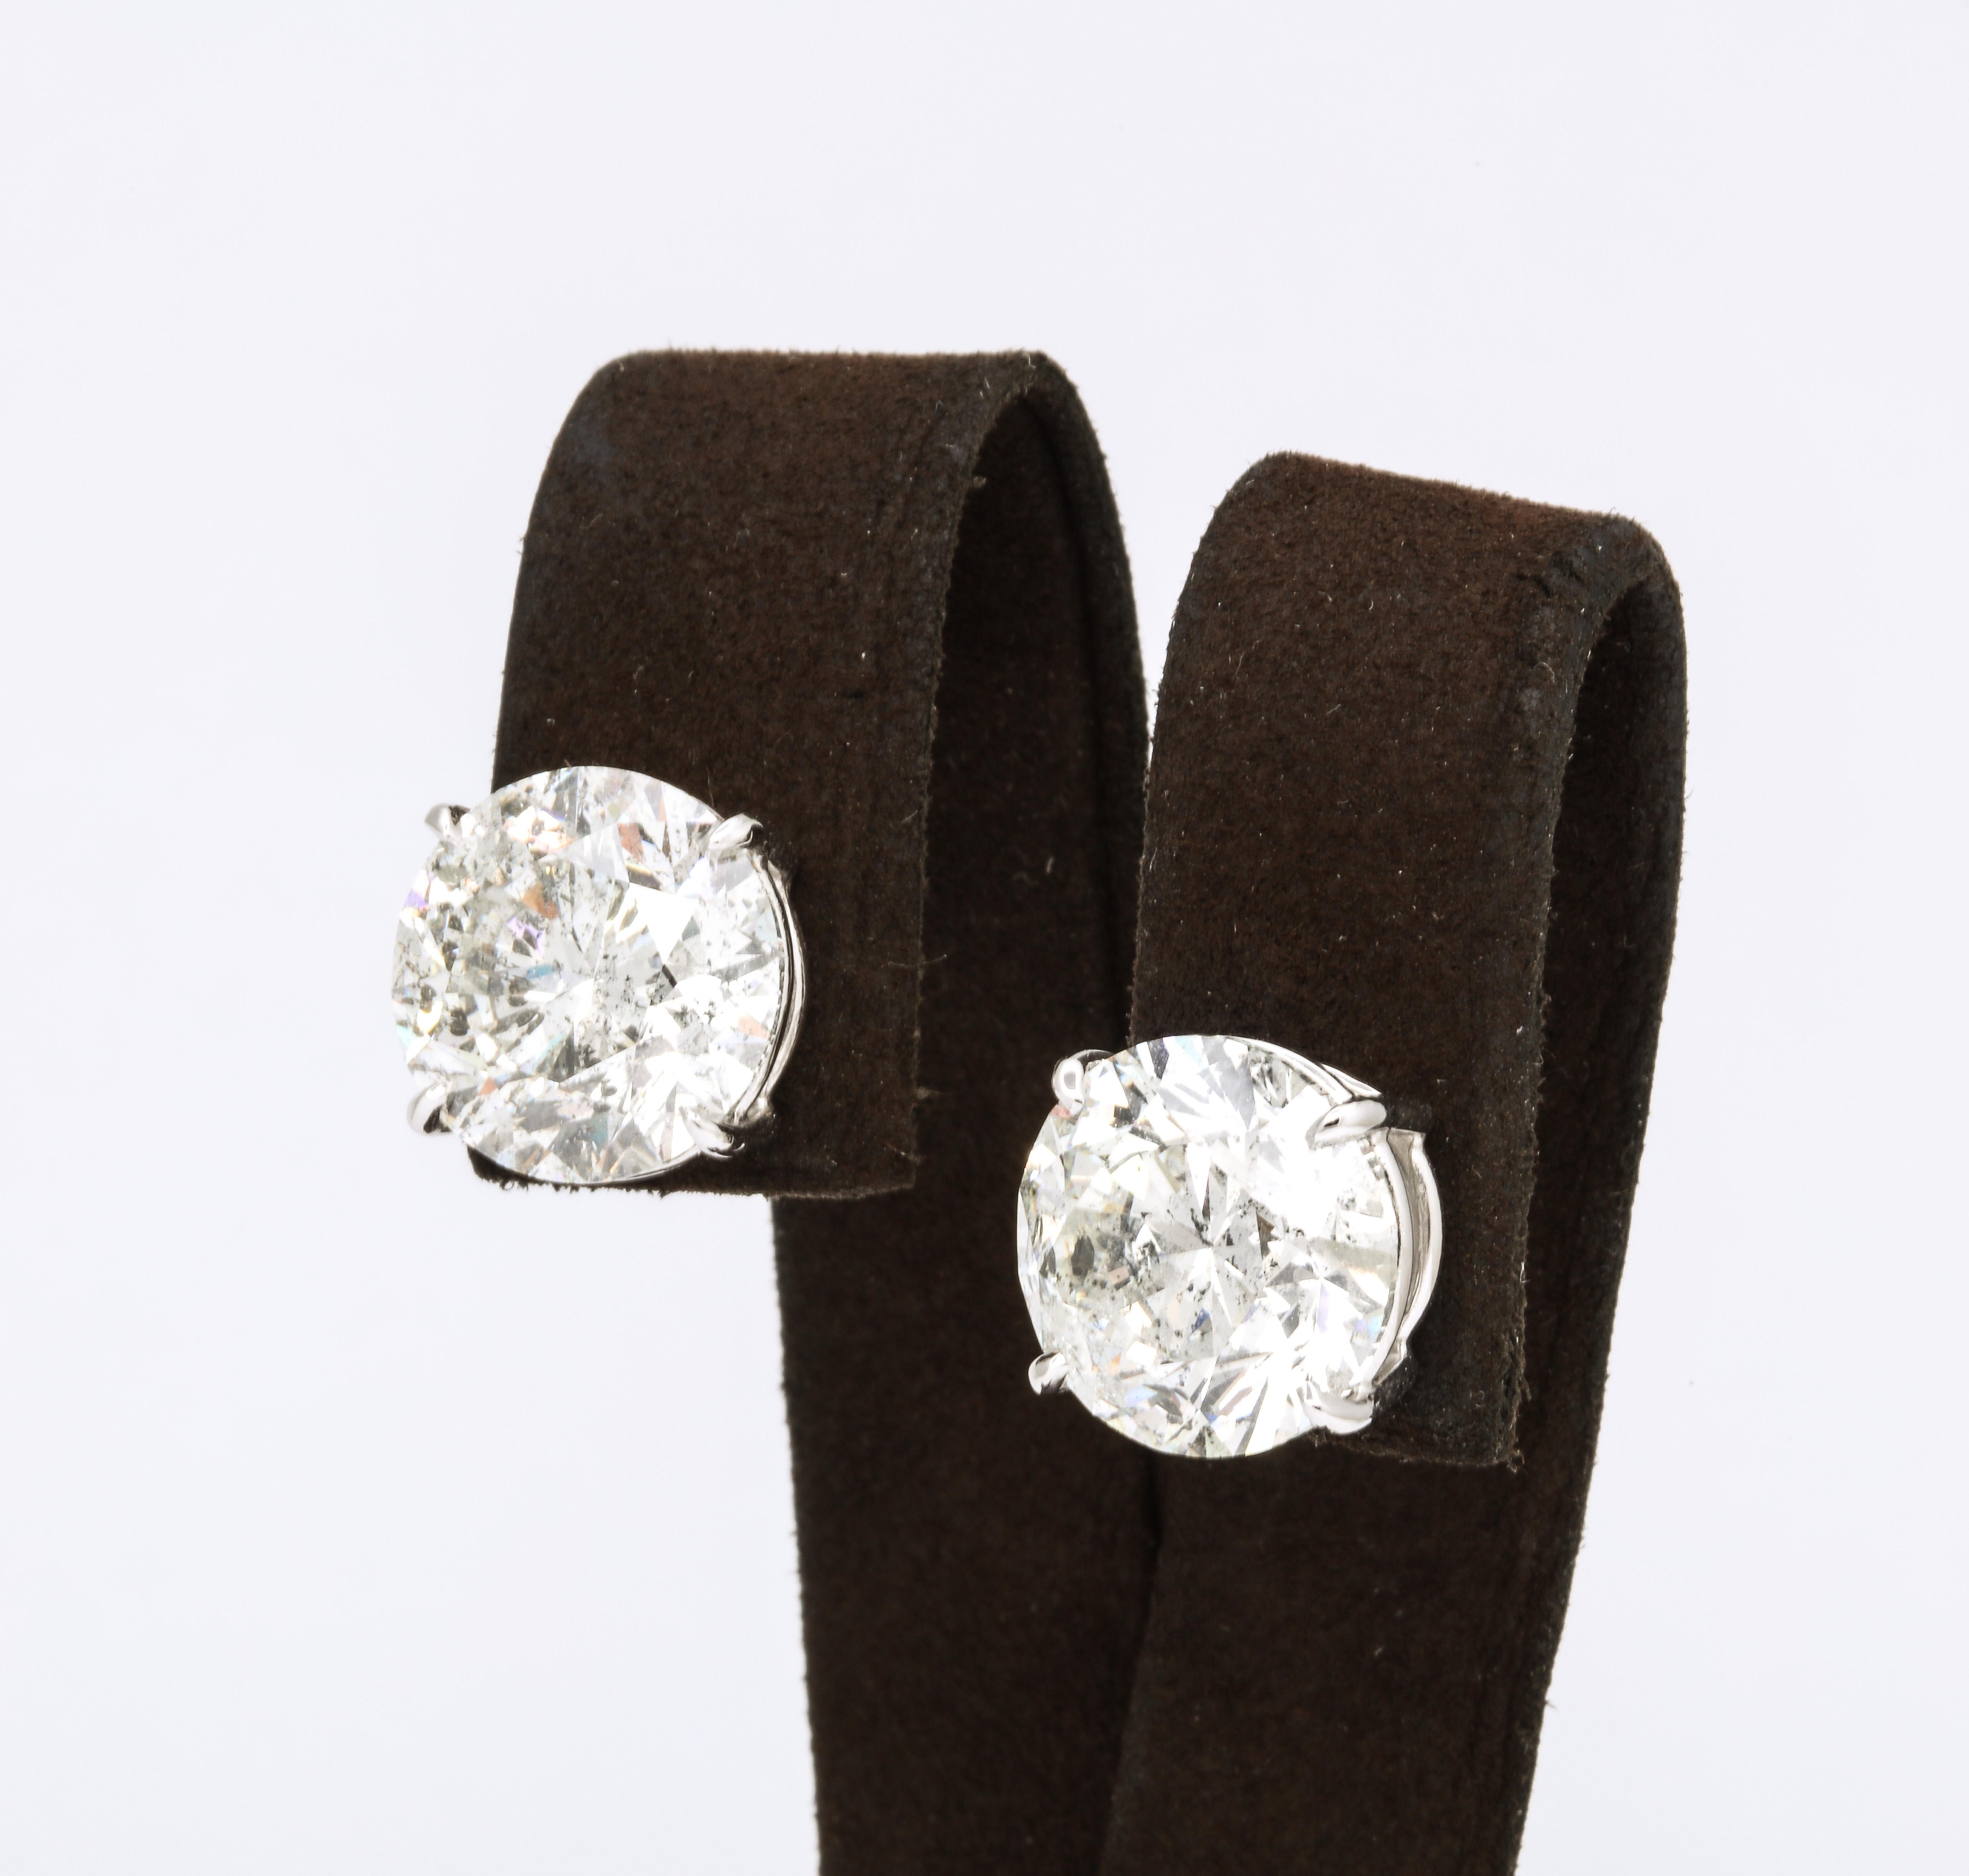 10 carat diamond earrings price